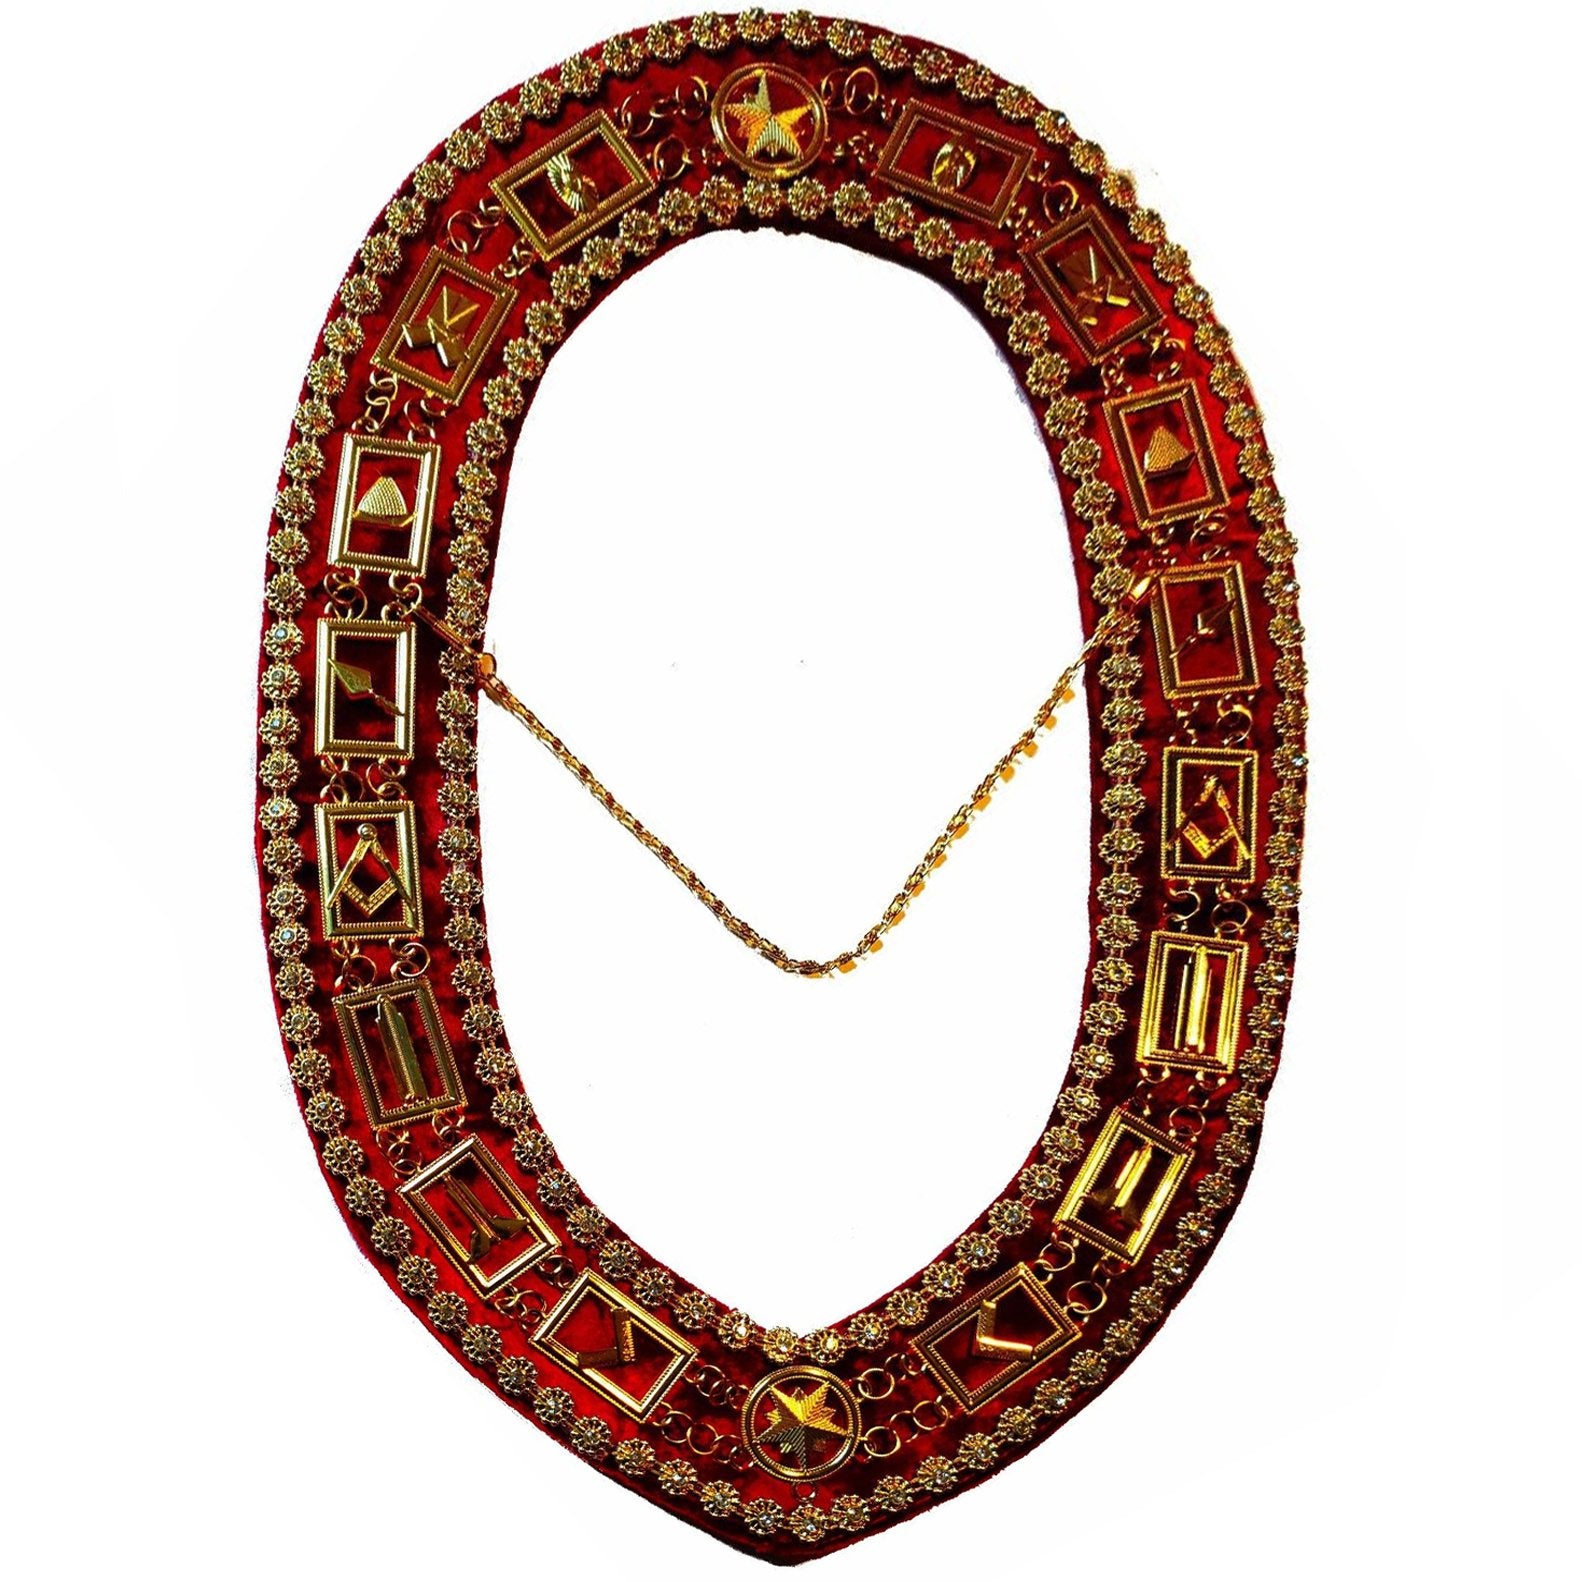 Blue Lodge Chain Collar - Gold Plated with Rhinestones on Red Velvet - Bricks Masons